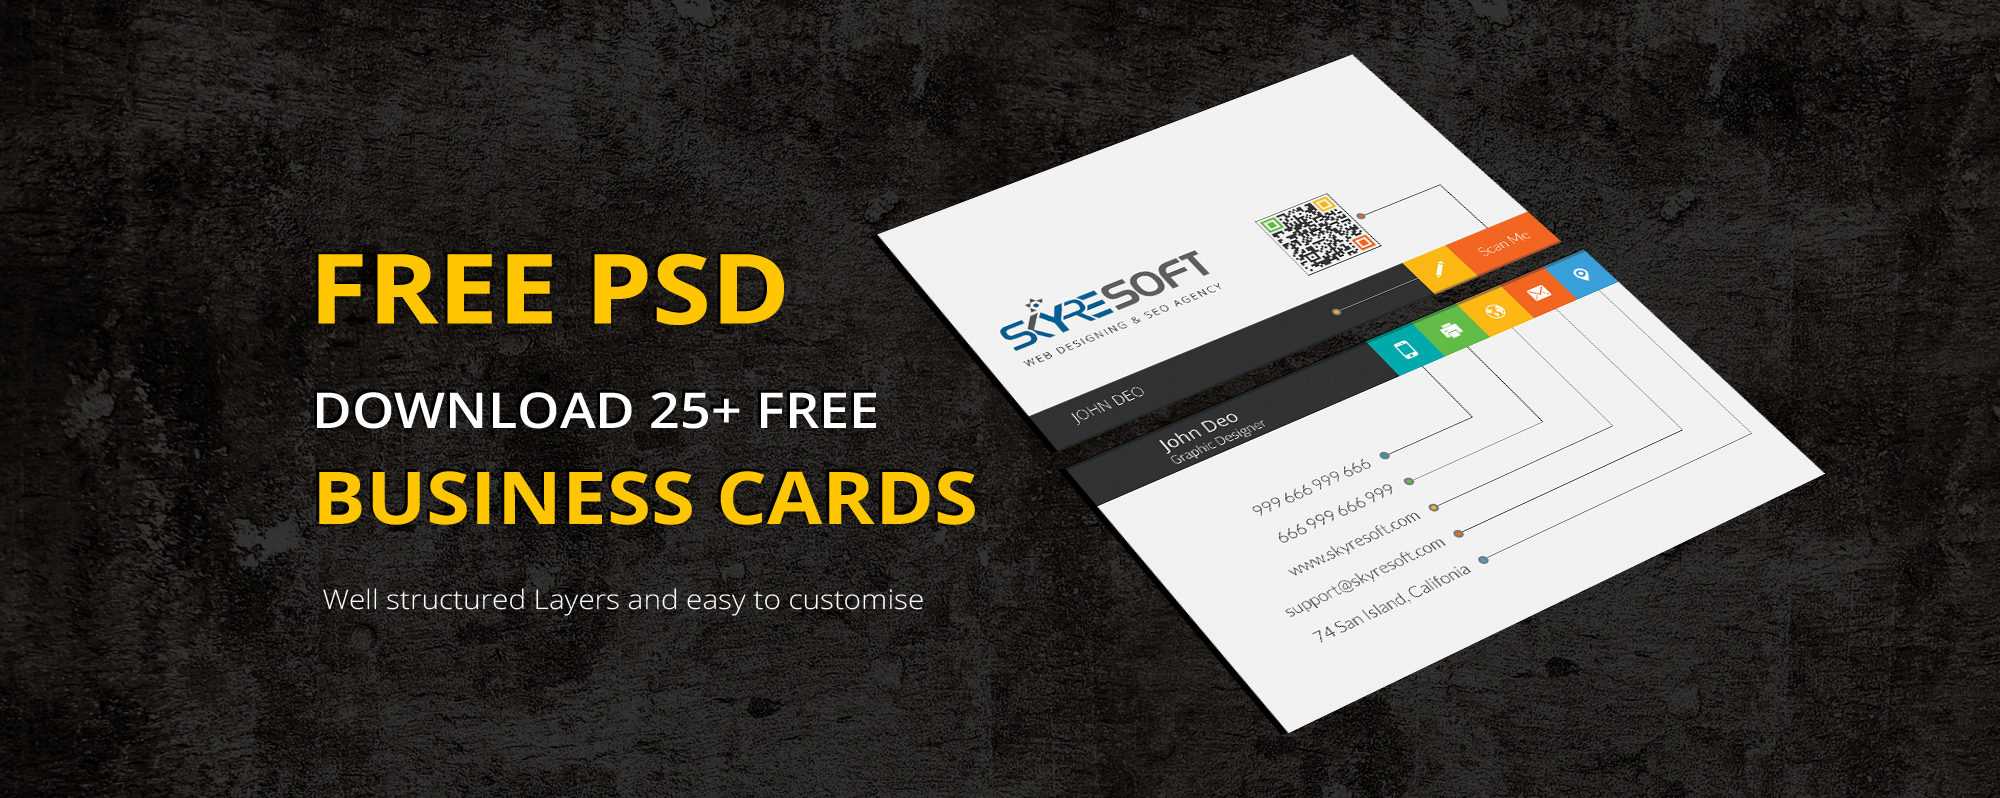 25 Creative Free Psd Business Card Templates 2019 Throughout Unique Business Card Templates Free